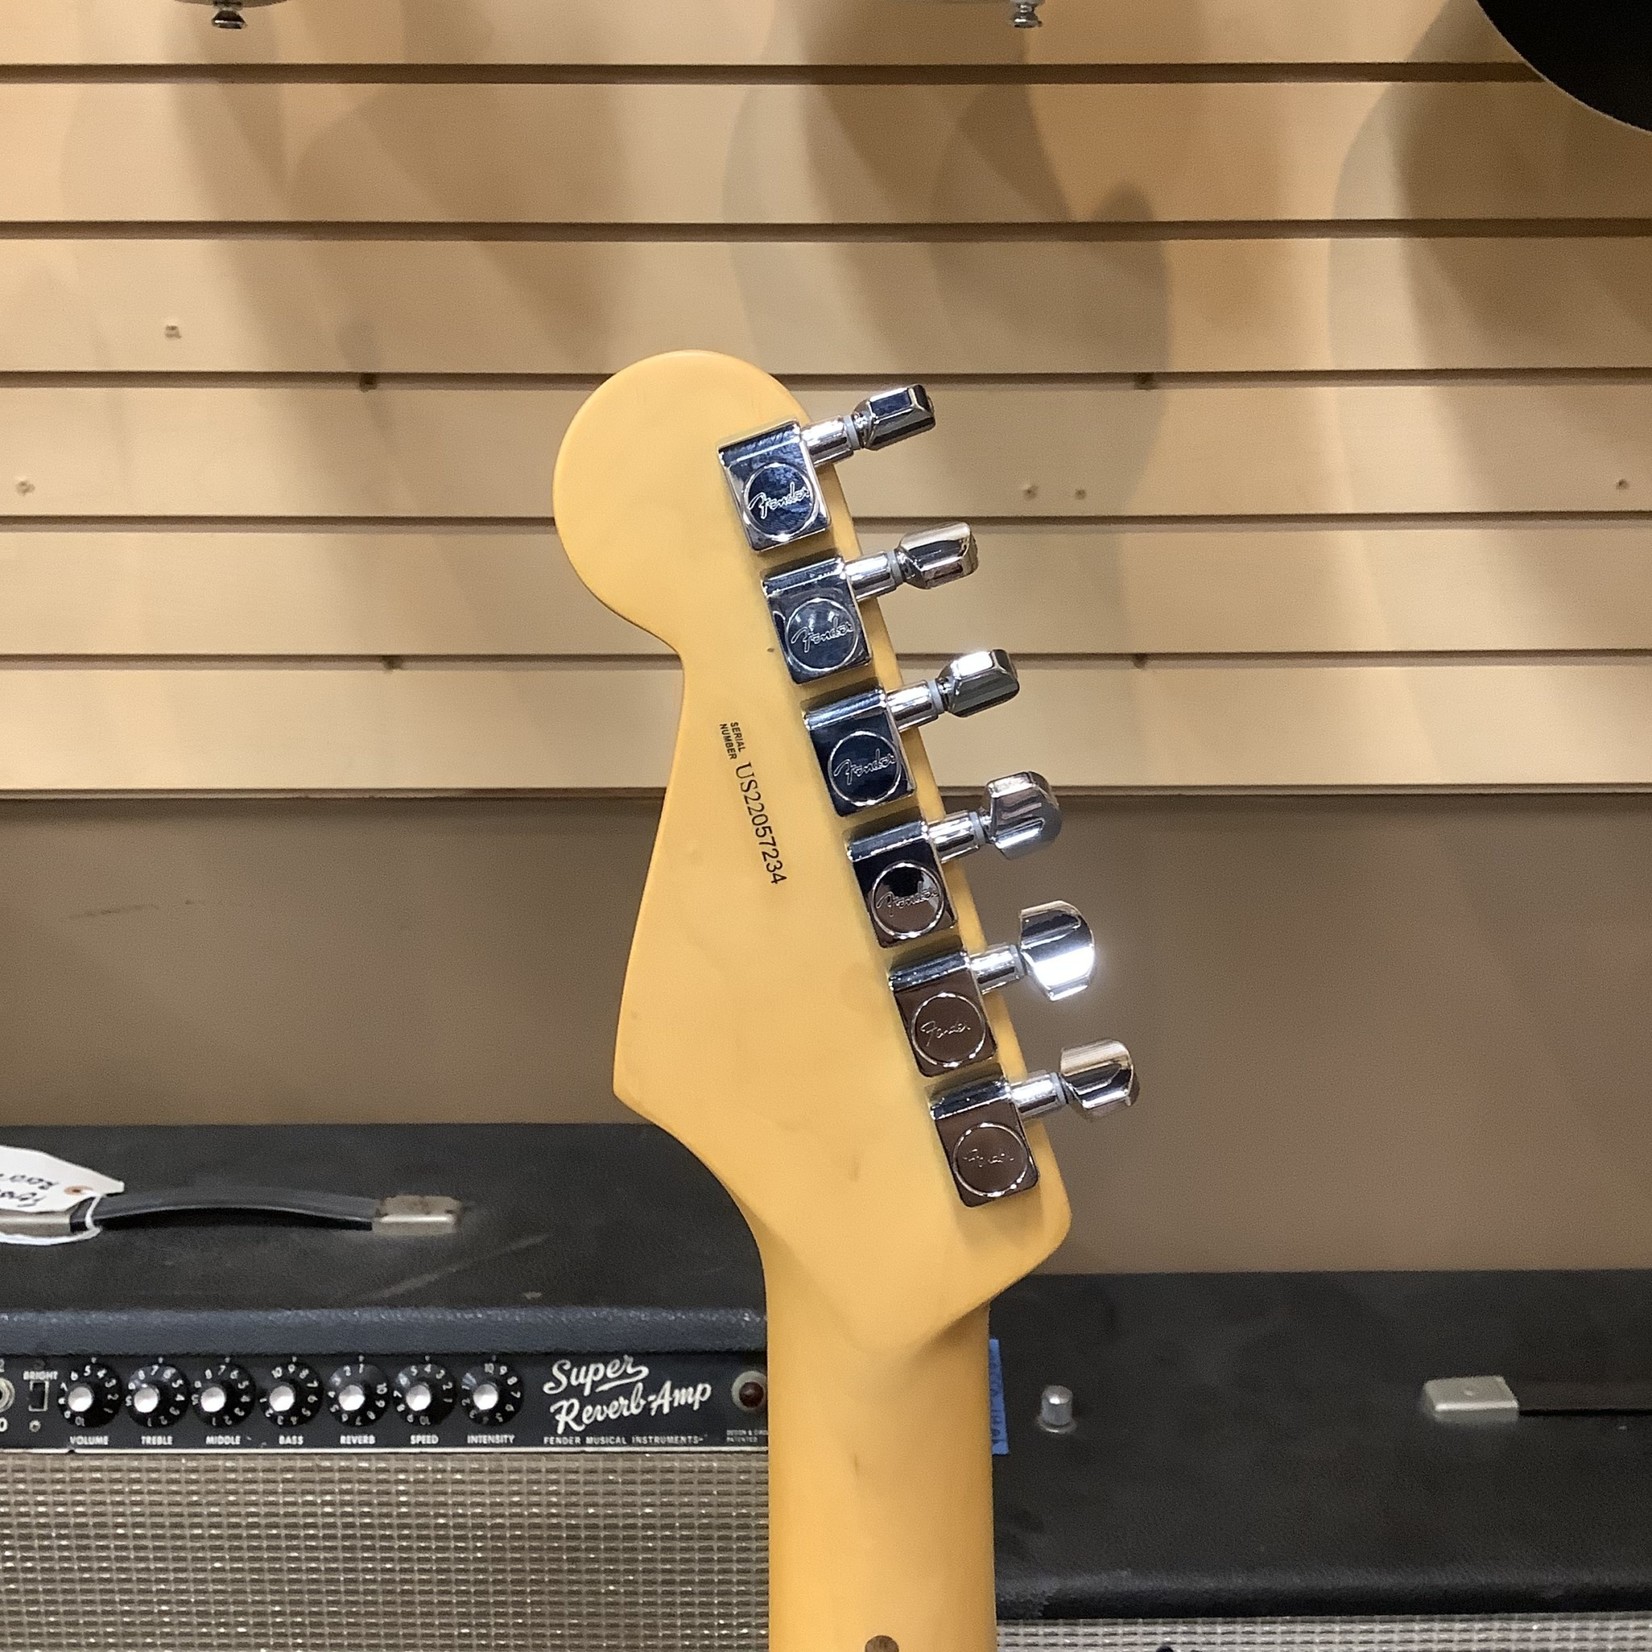 Fender 2022 Fender Stratocaster American Pro II Maui Blue Maple Neck